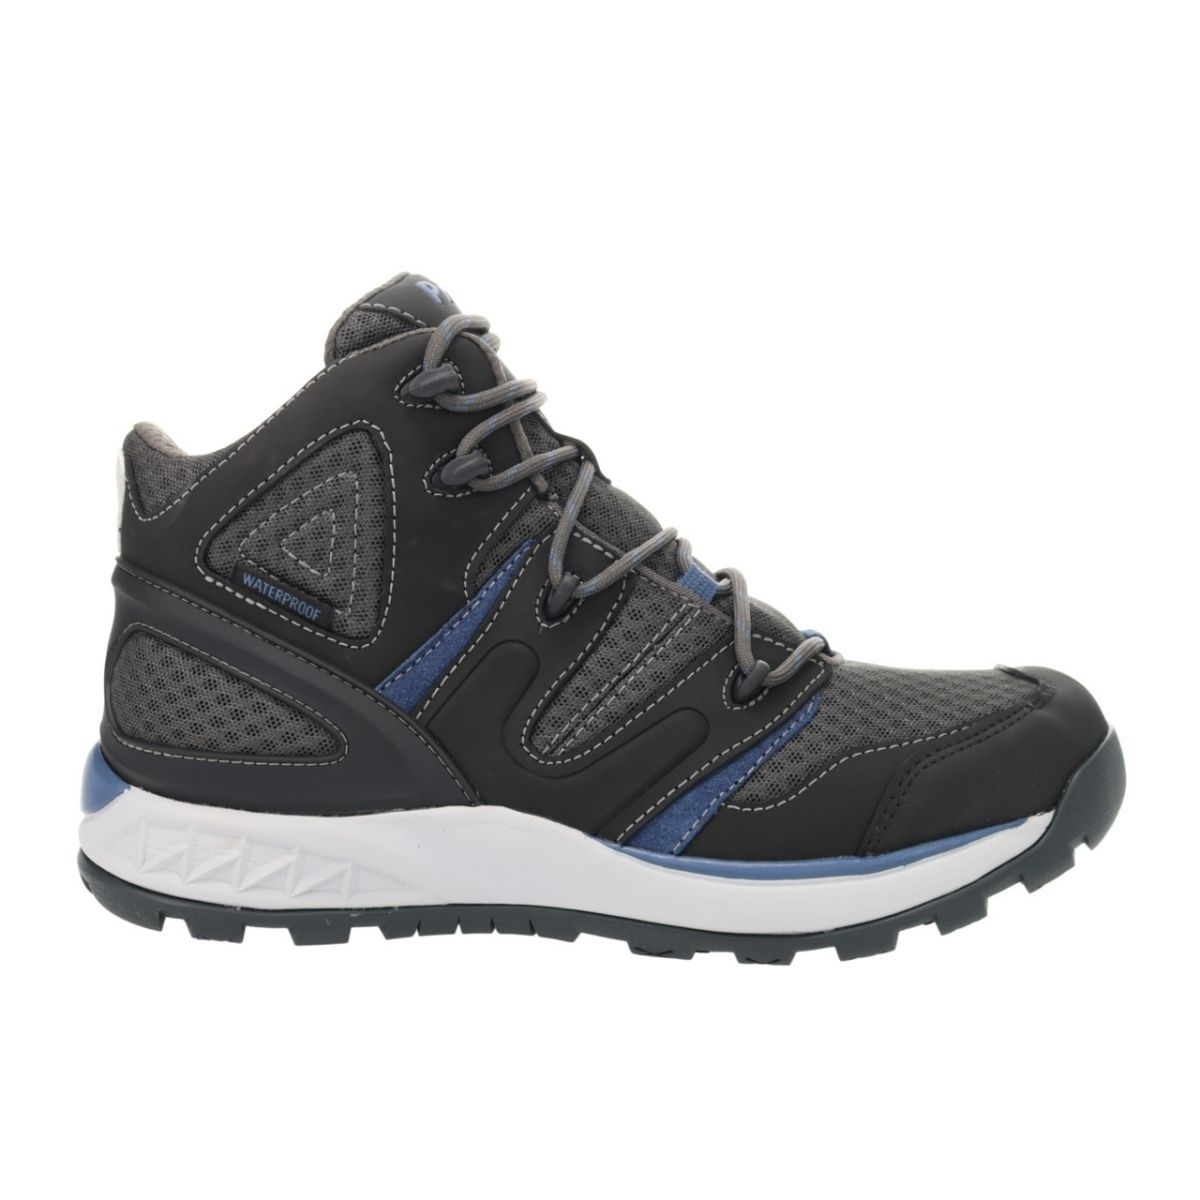 Propet Men's Veymont Waterproof Hiking Boot Grey/Blue - MOA022SGRB GREY/BLUE - GREY/BLUE, 11 XX-Wide